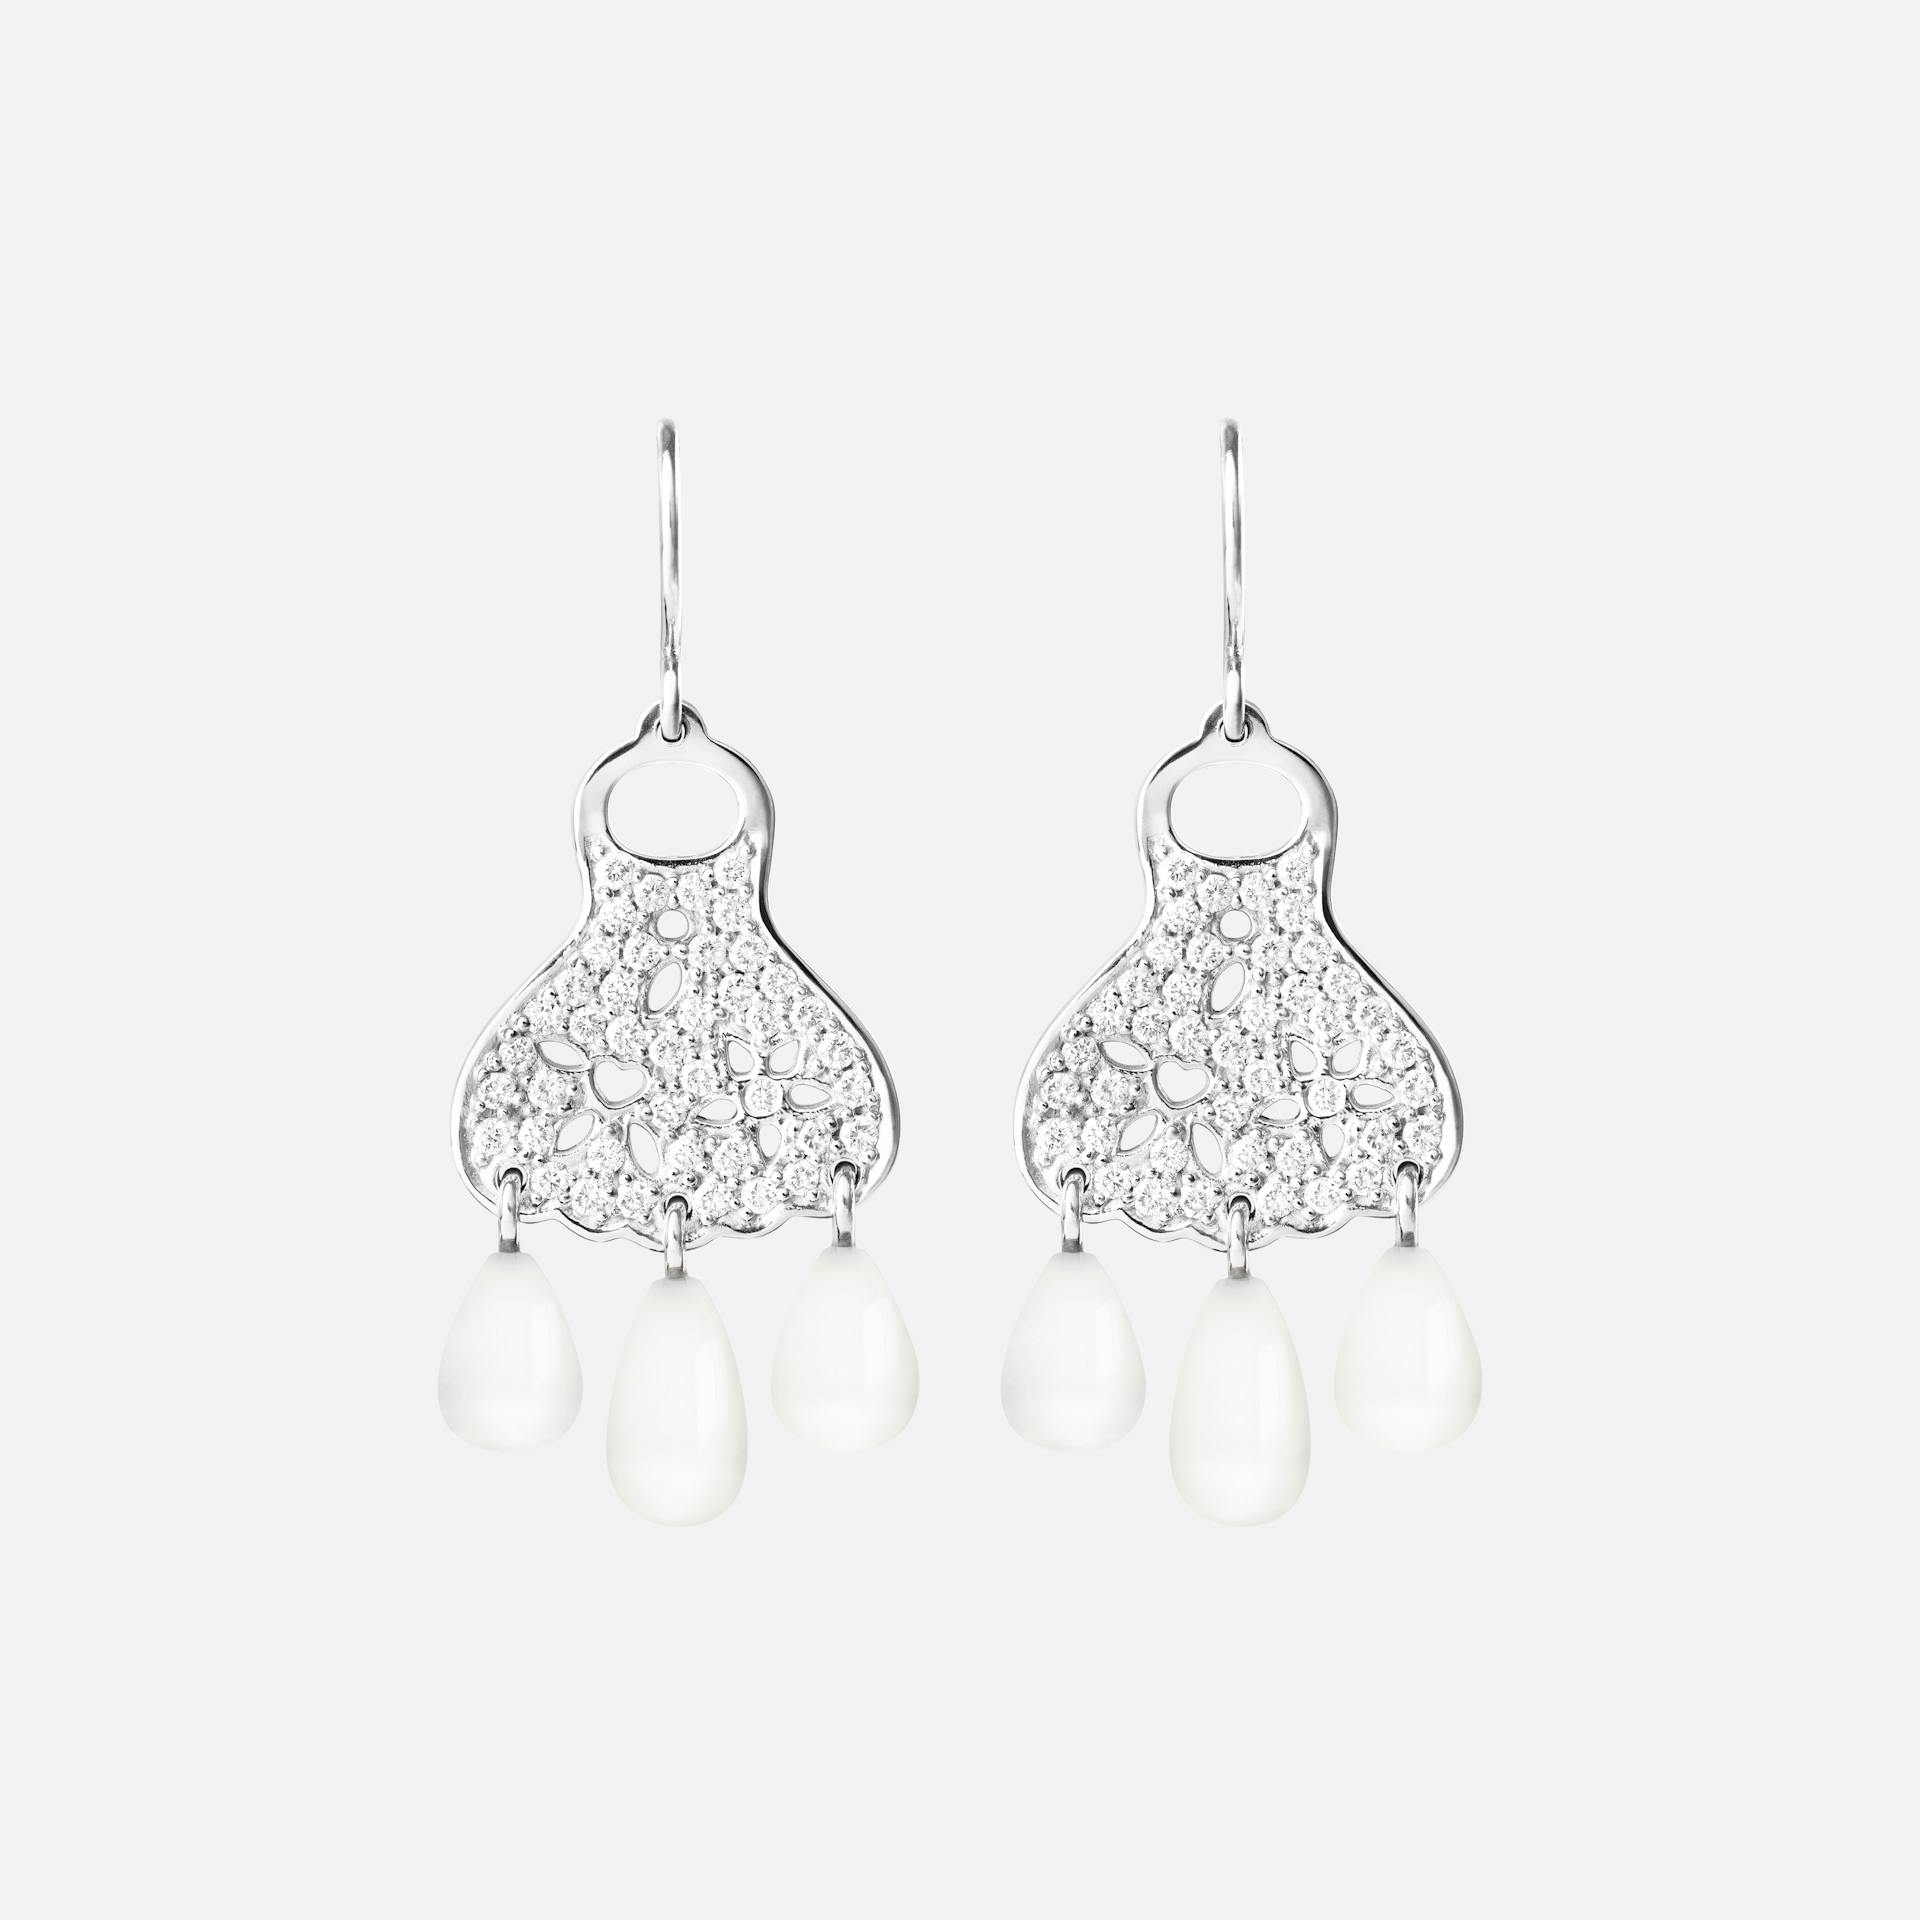 Lace Earrings in White Gold with Diamonds & White Moonstone   |  Ole Lynggaard Copenhagen